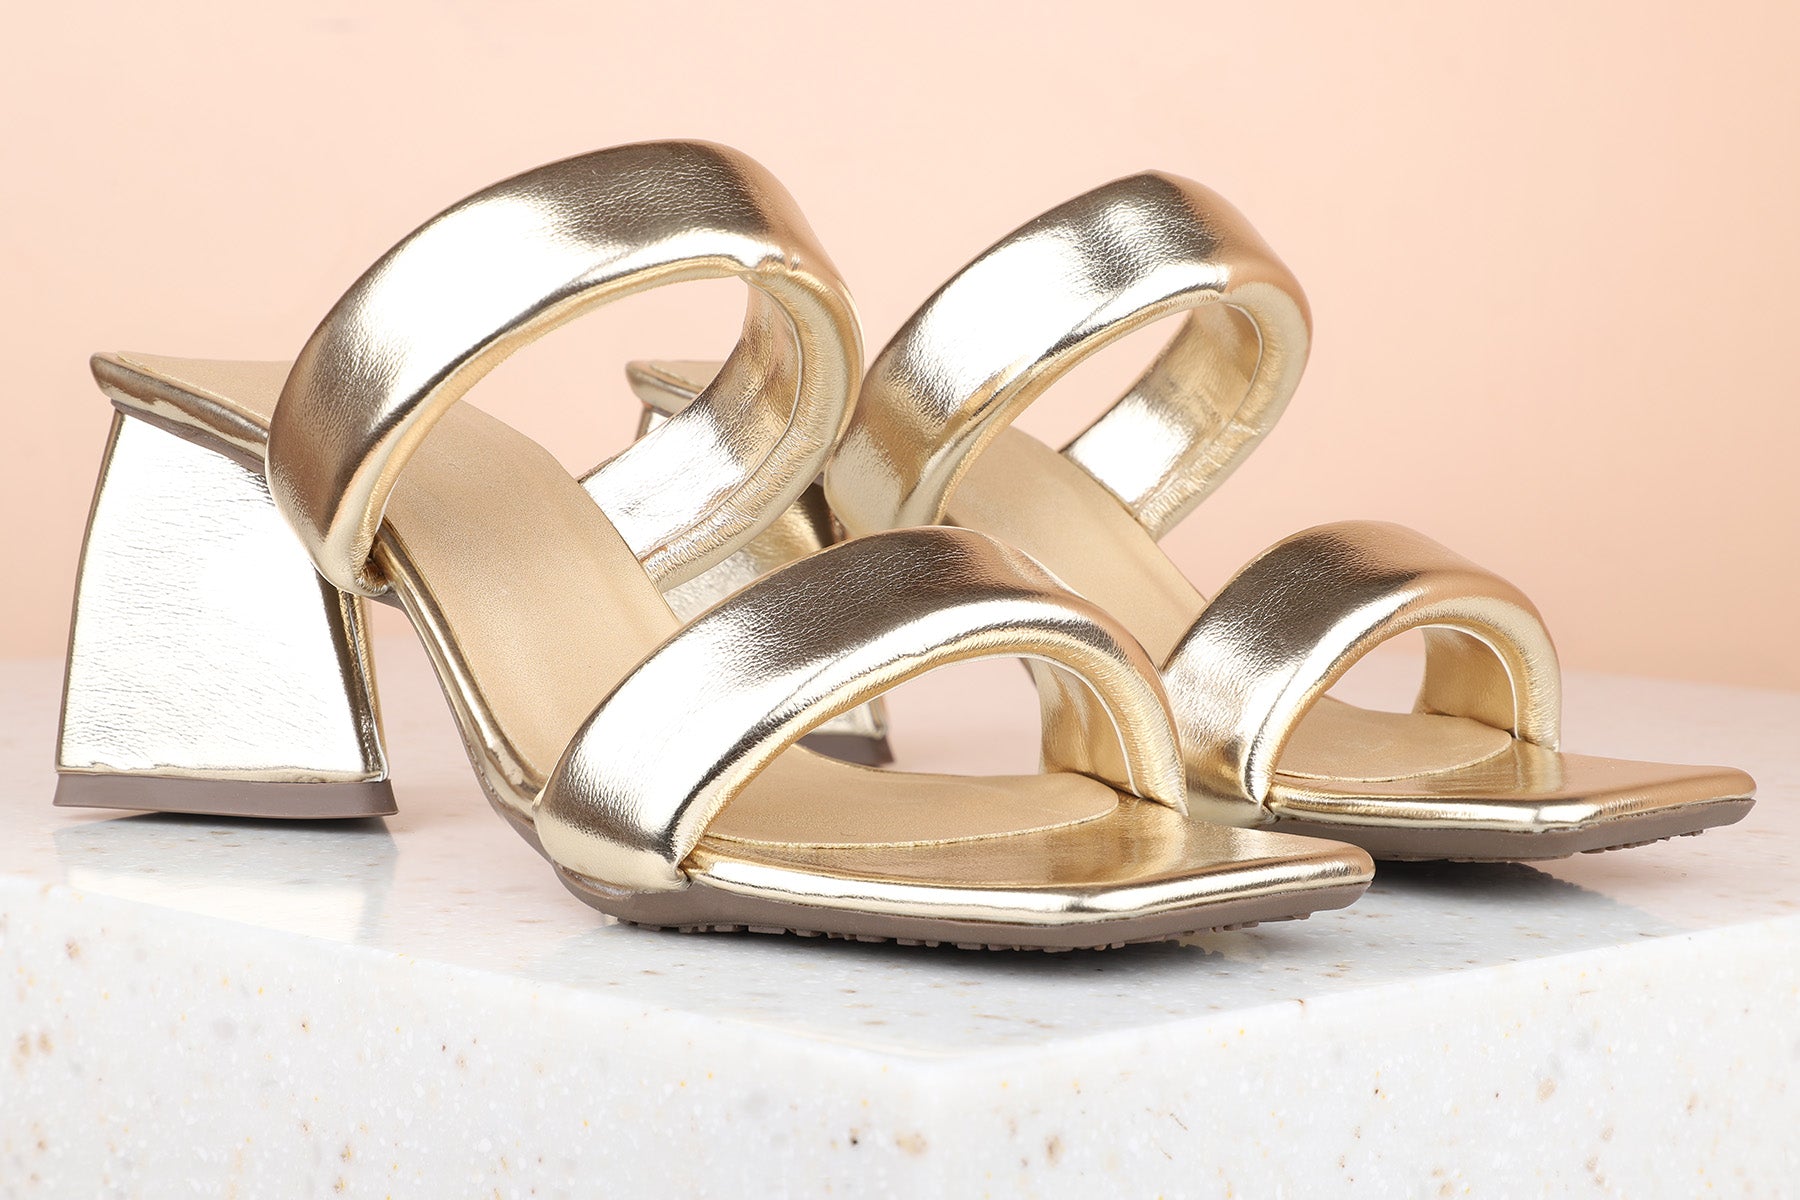 Buy Inc.5 Women Peach Embellished Block Heels at Amazon.in